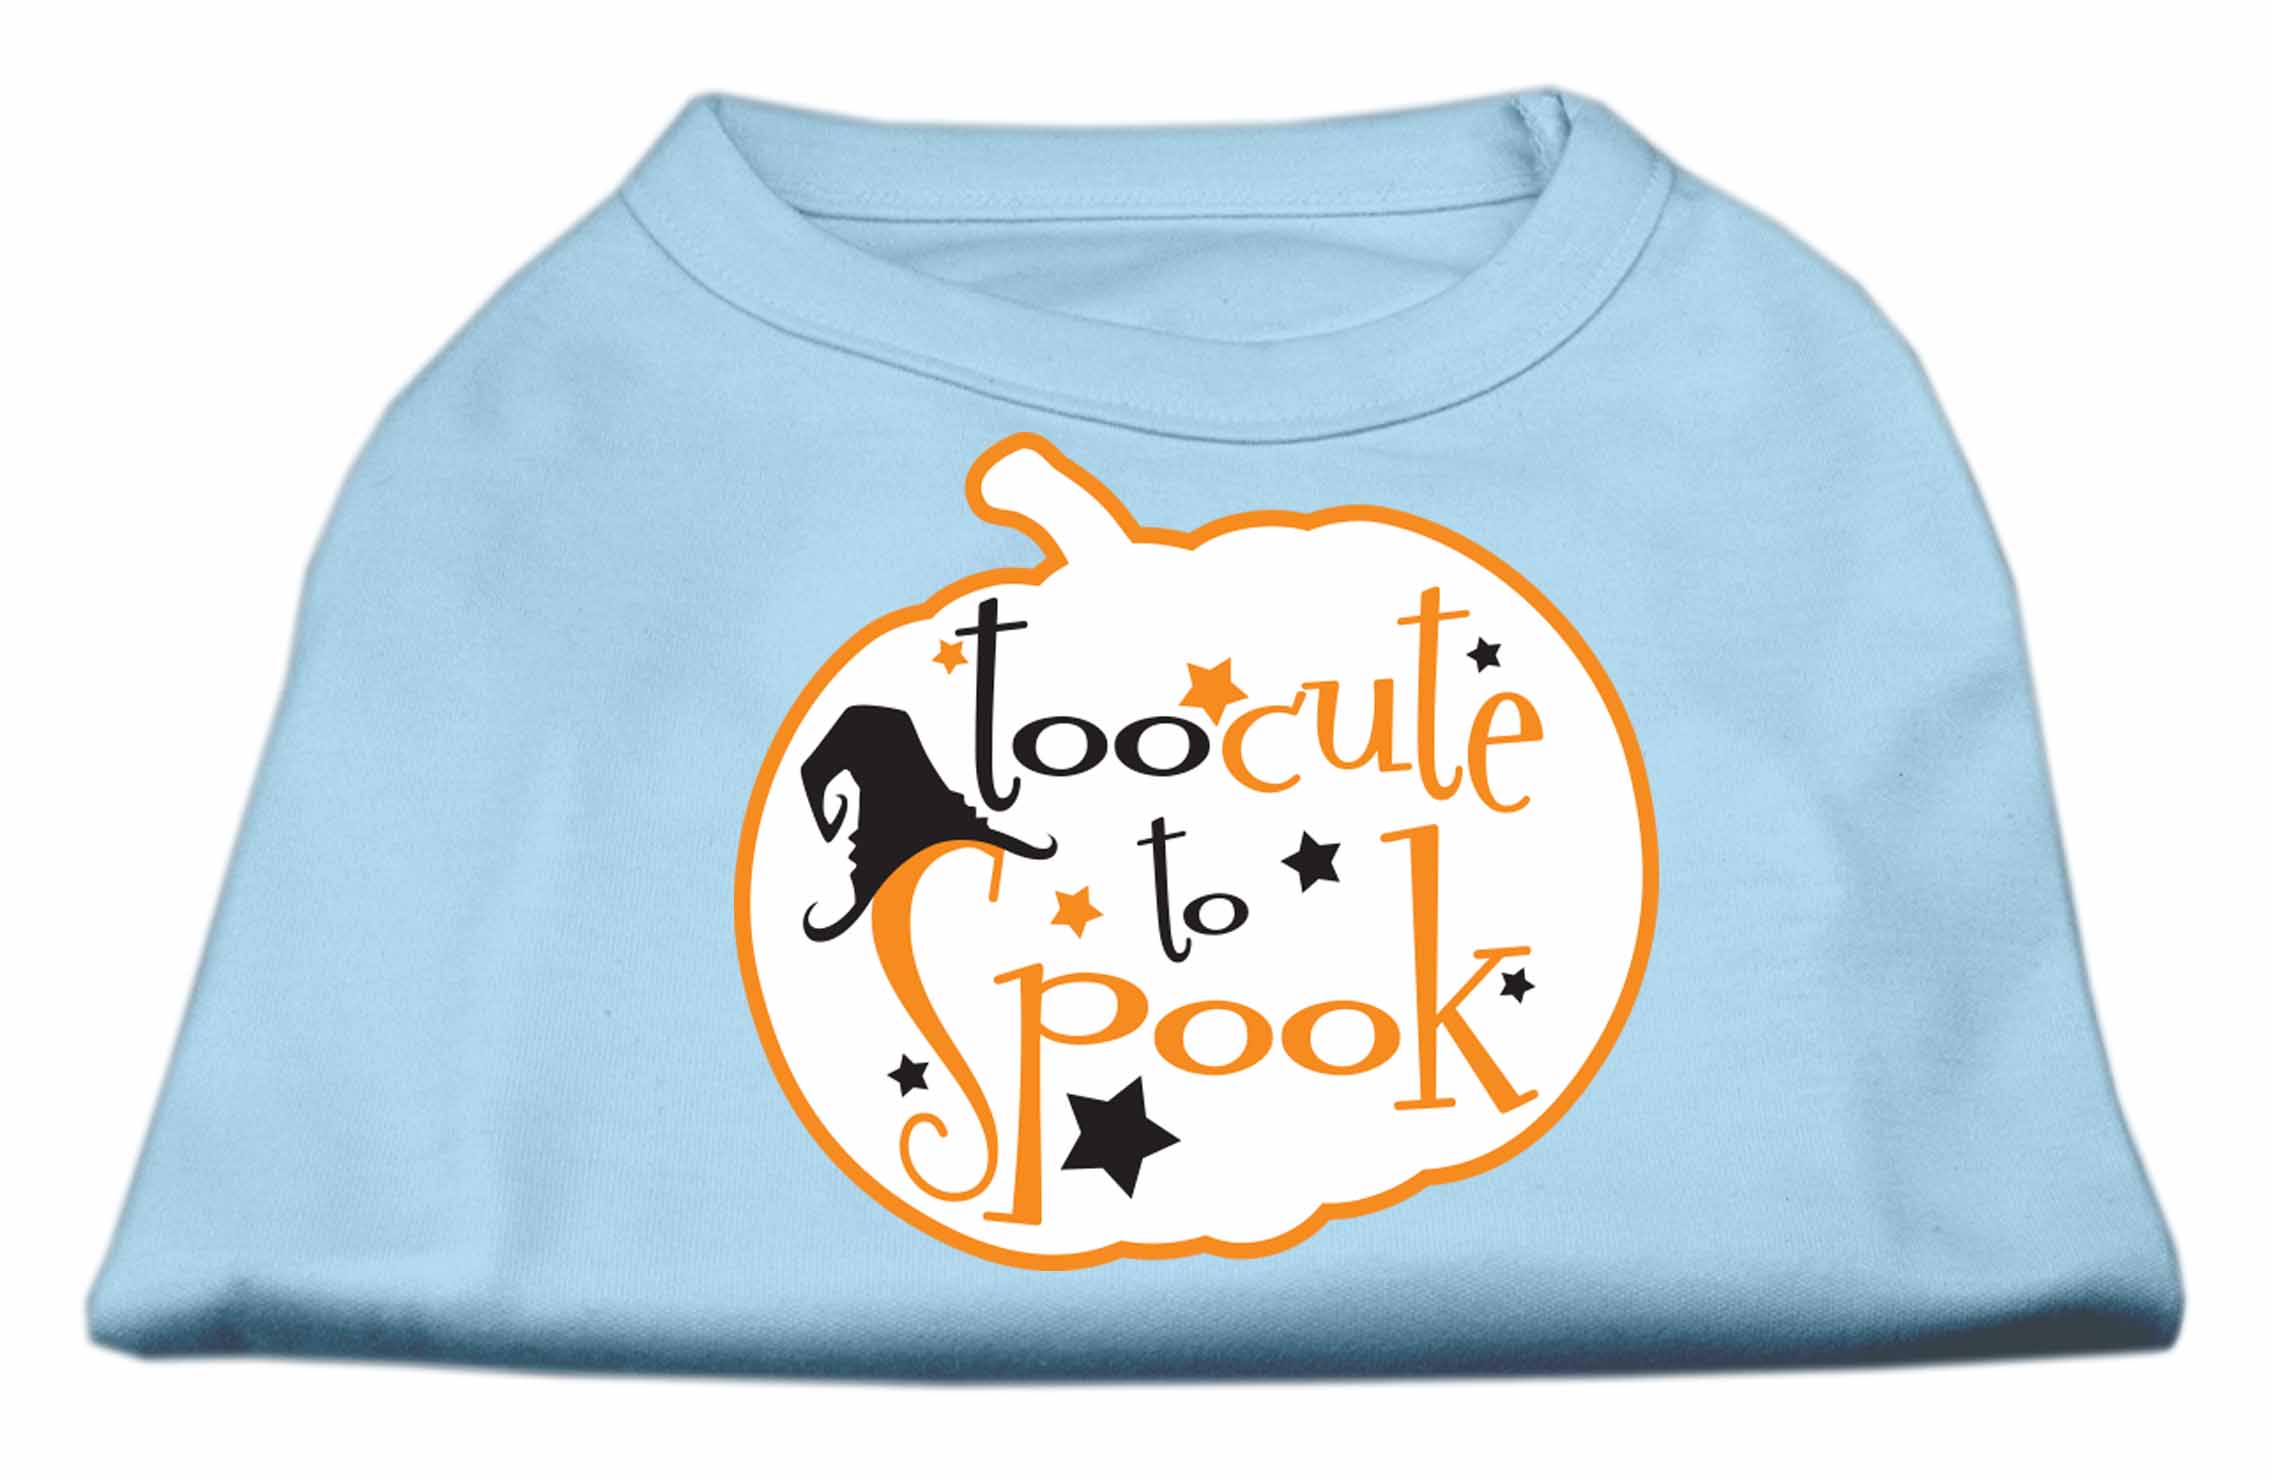 Too Cute to Spook Screen Print Dog Shirt Baby Blue XS